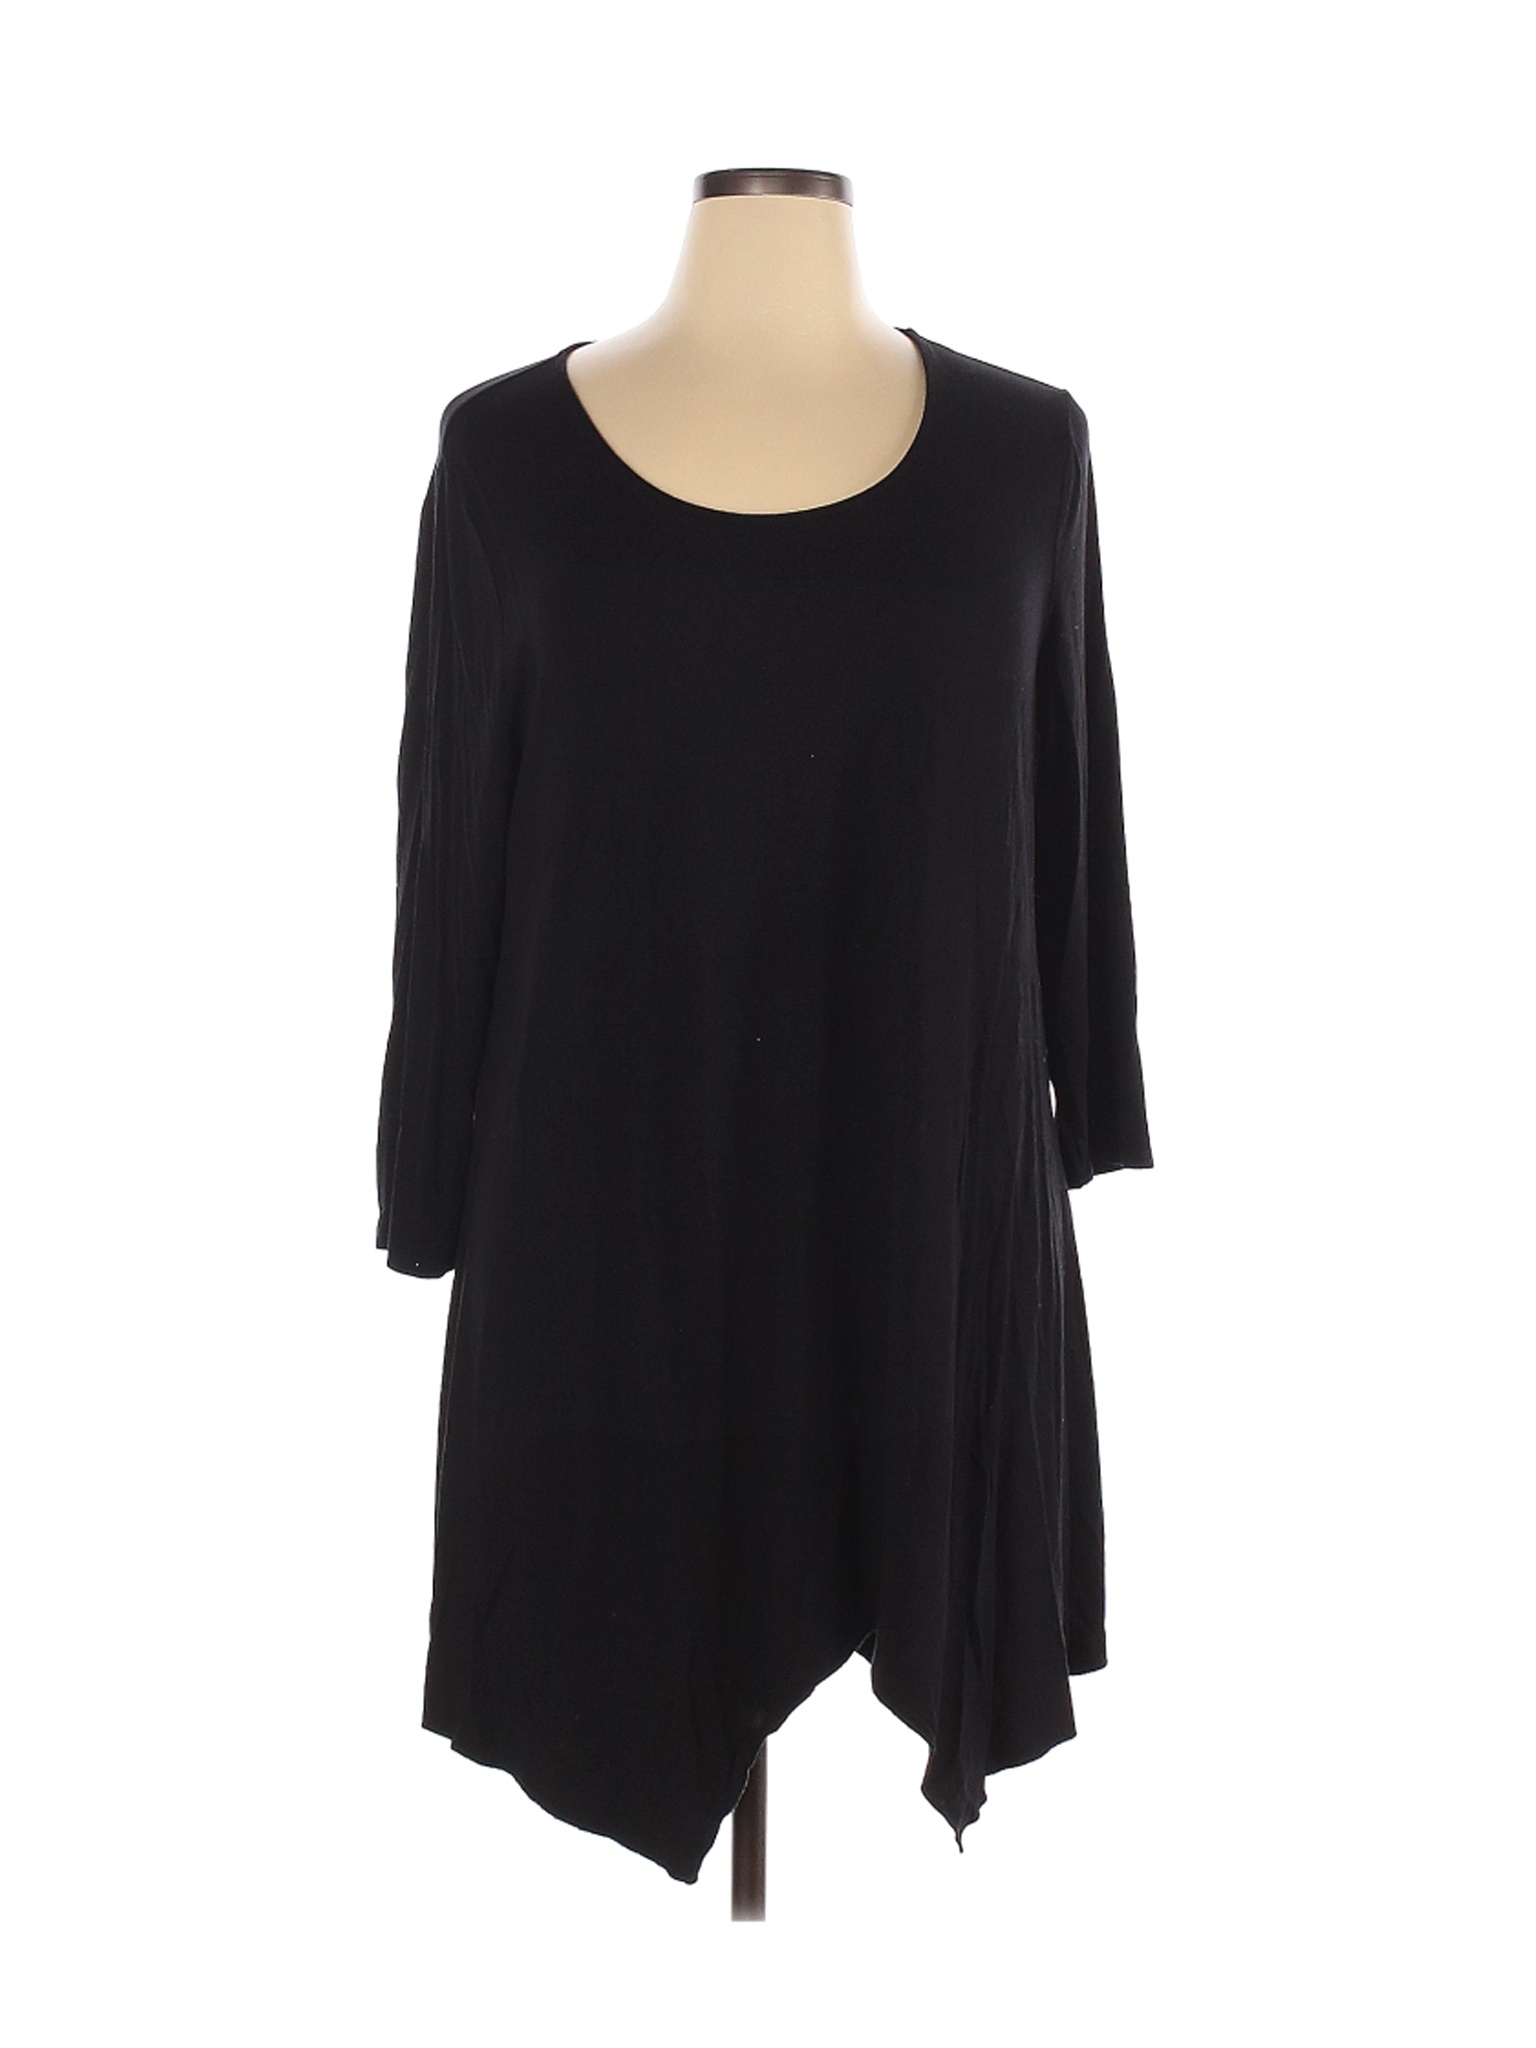 Chico's Women Black Casual Dress XL | eBay